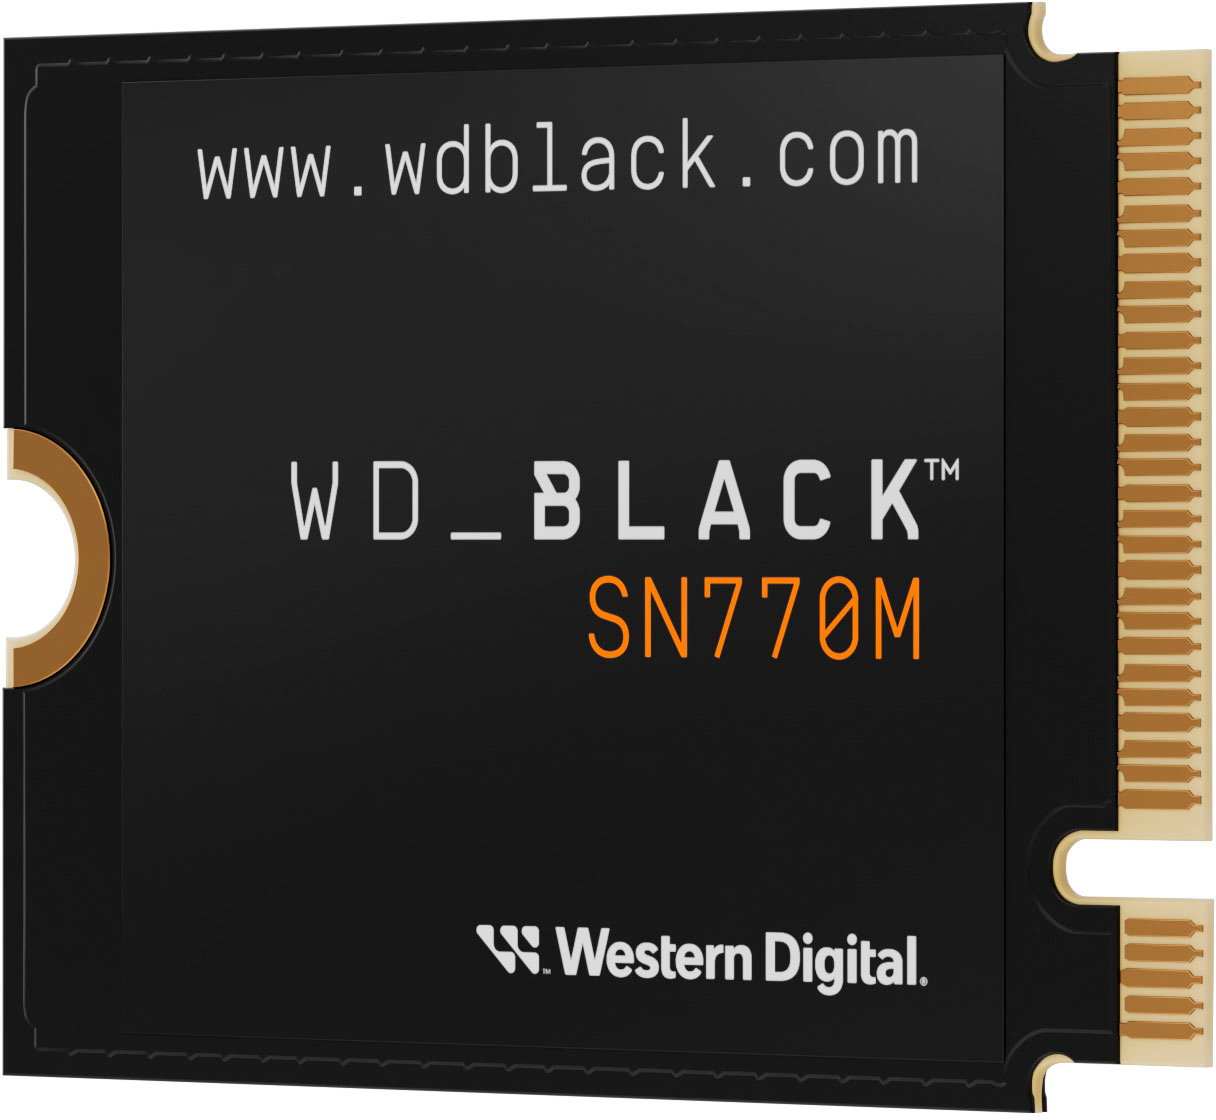 WD BLACK SN770M 2TB Internal SSD PCIe Gen 4 x4 M.2 2230 for ROG